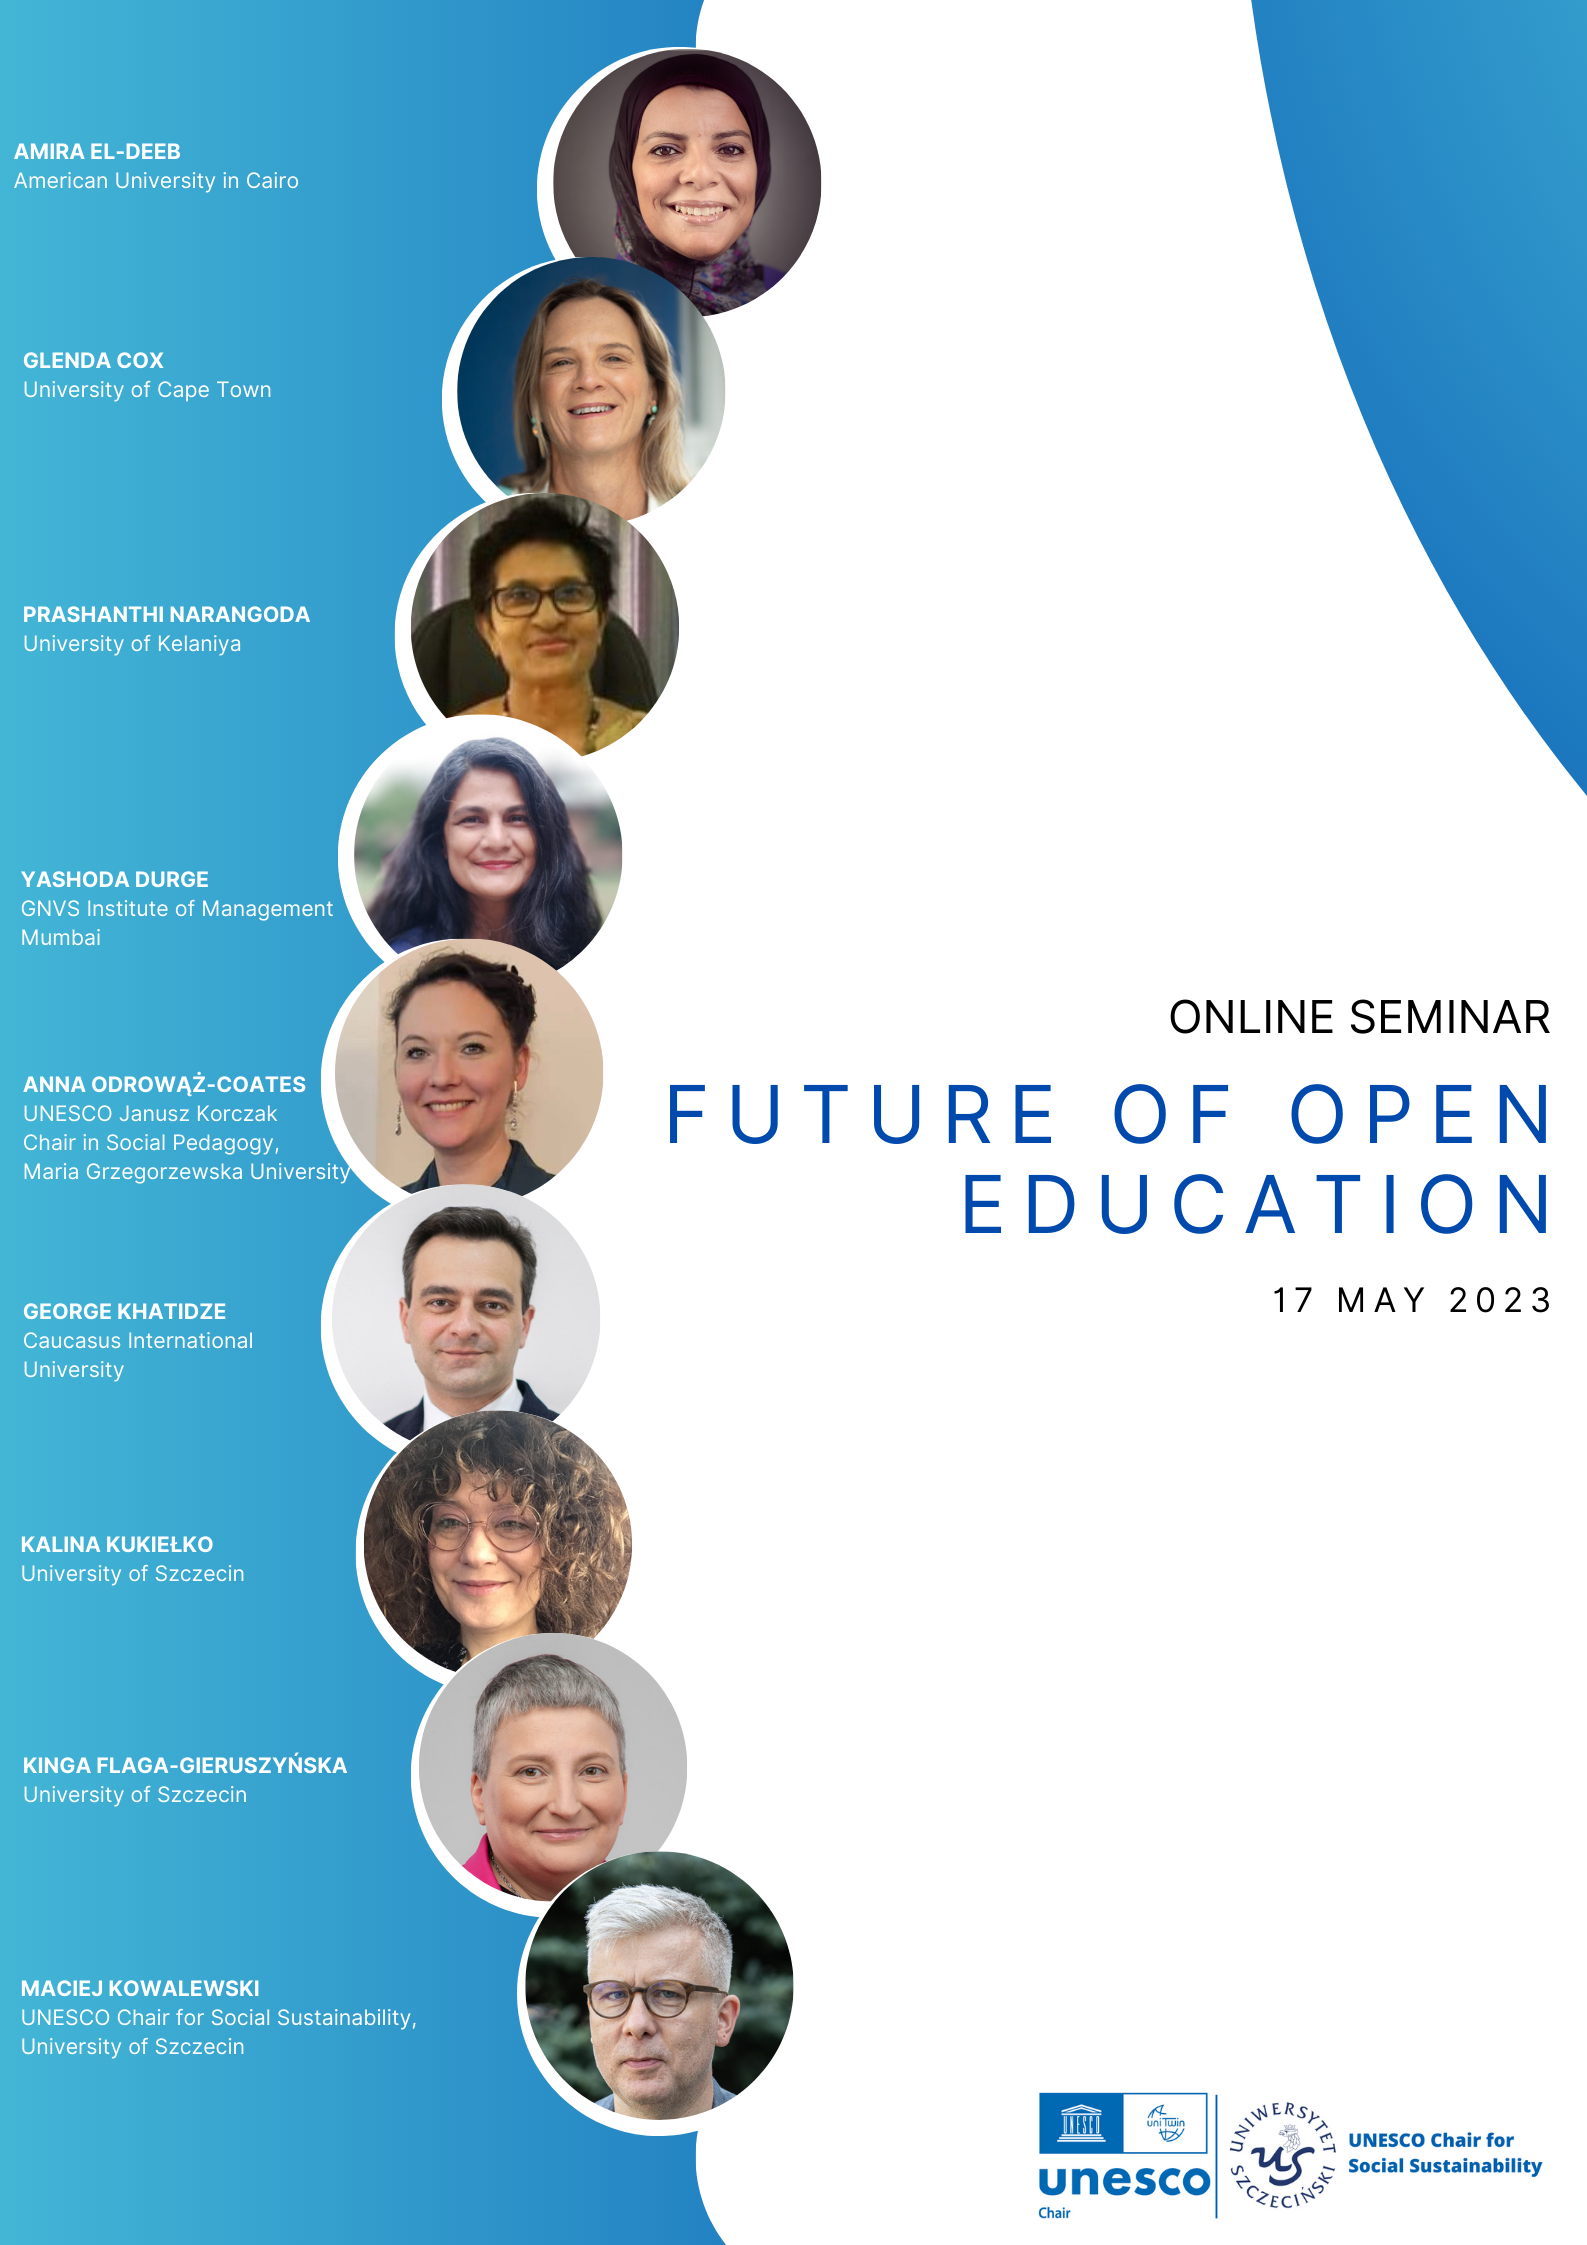 Seminar ‚Future of Open Education’. May 17, 2023